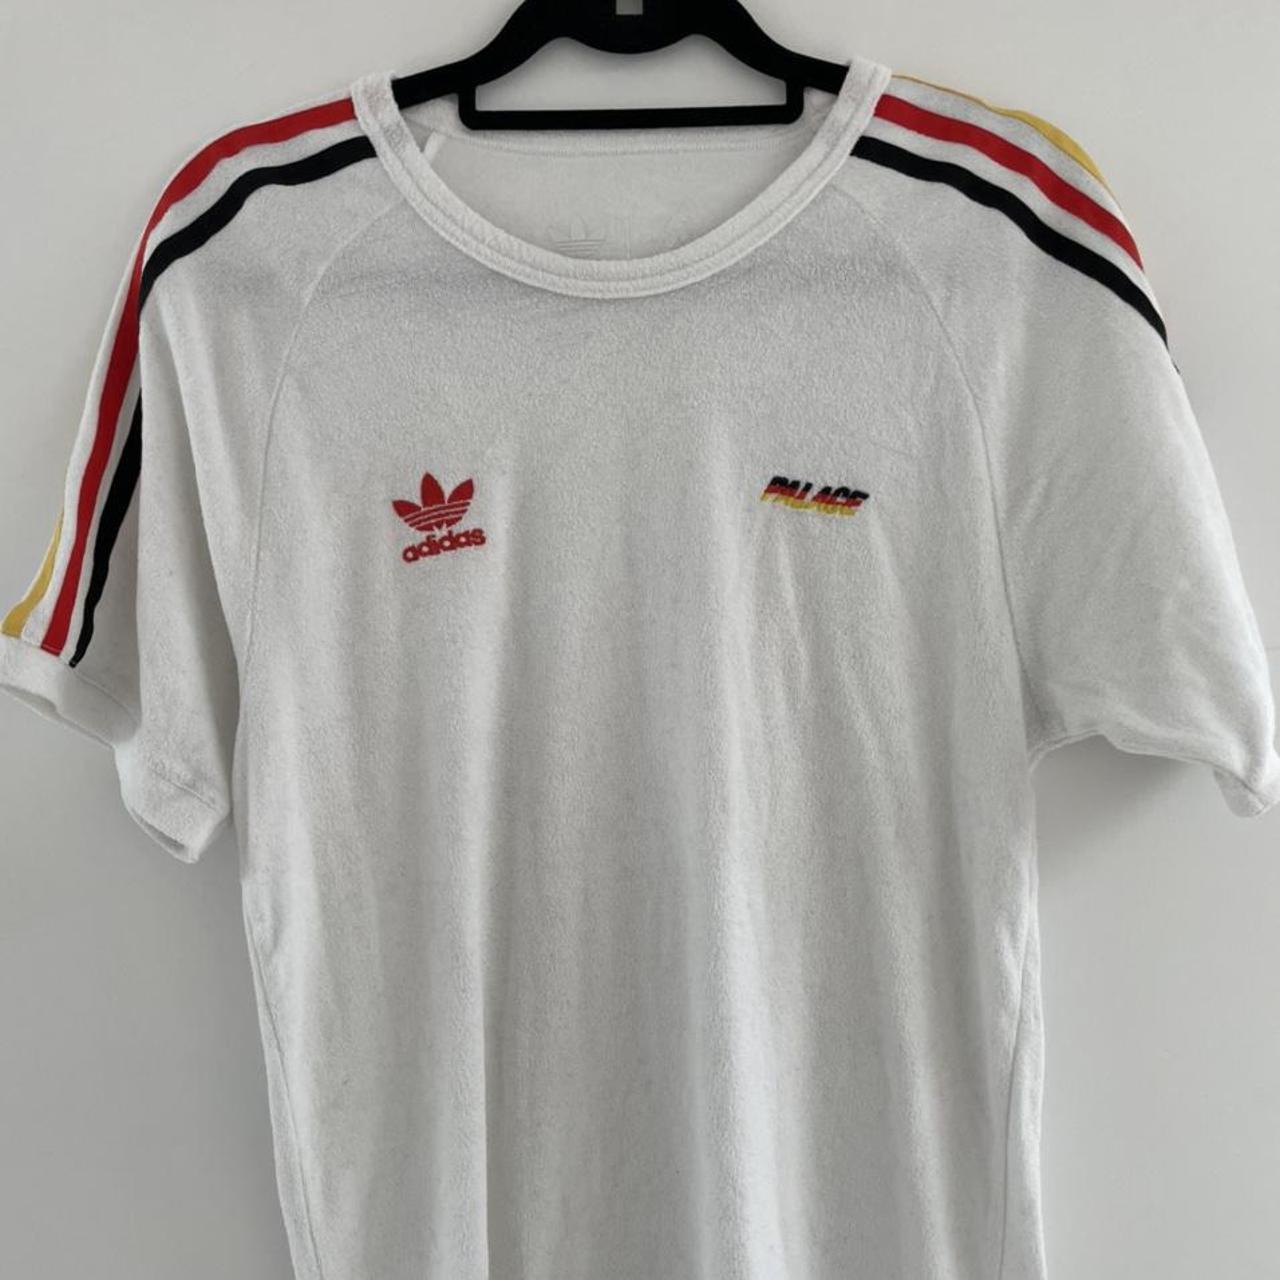 Palace x Adidas Germany terry towel t shirt. Size... - Depop